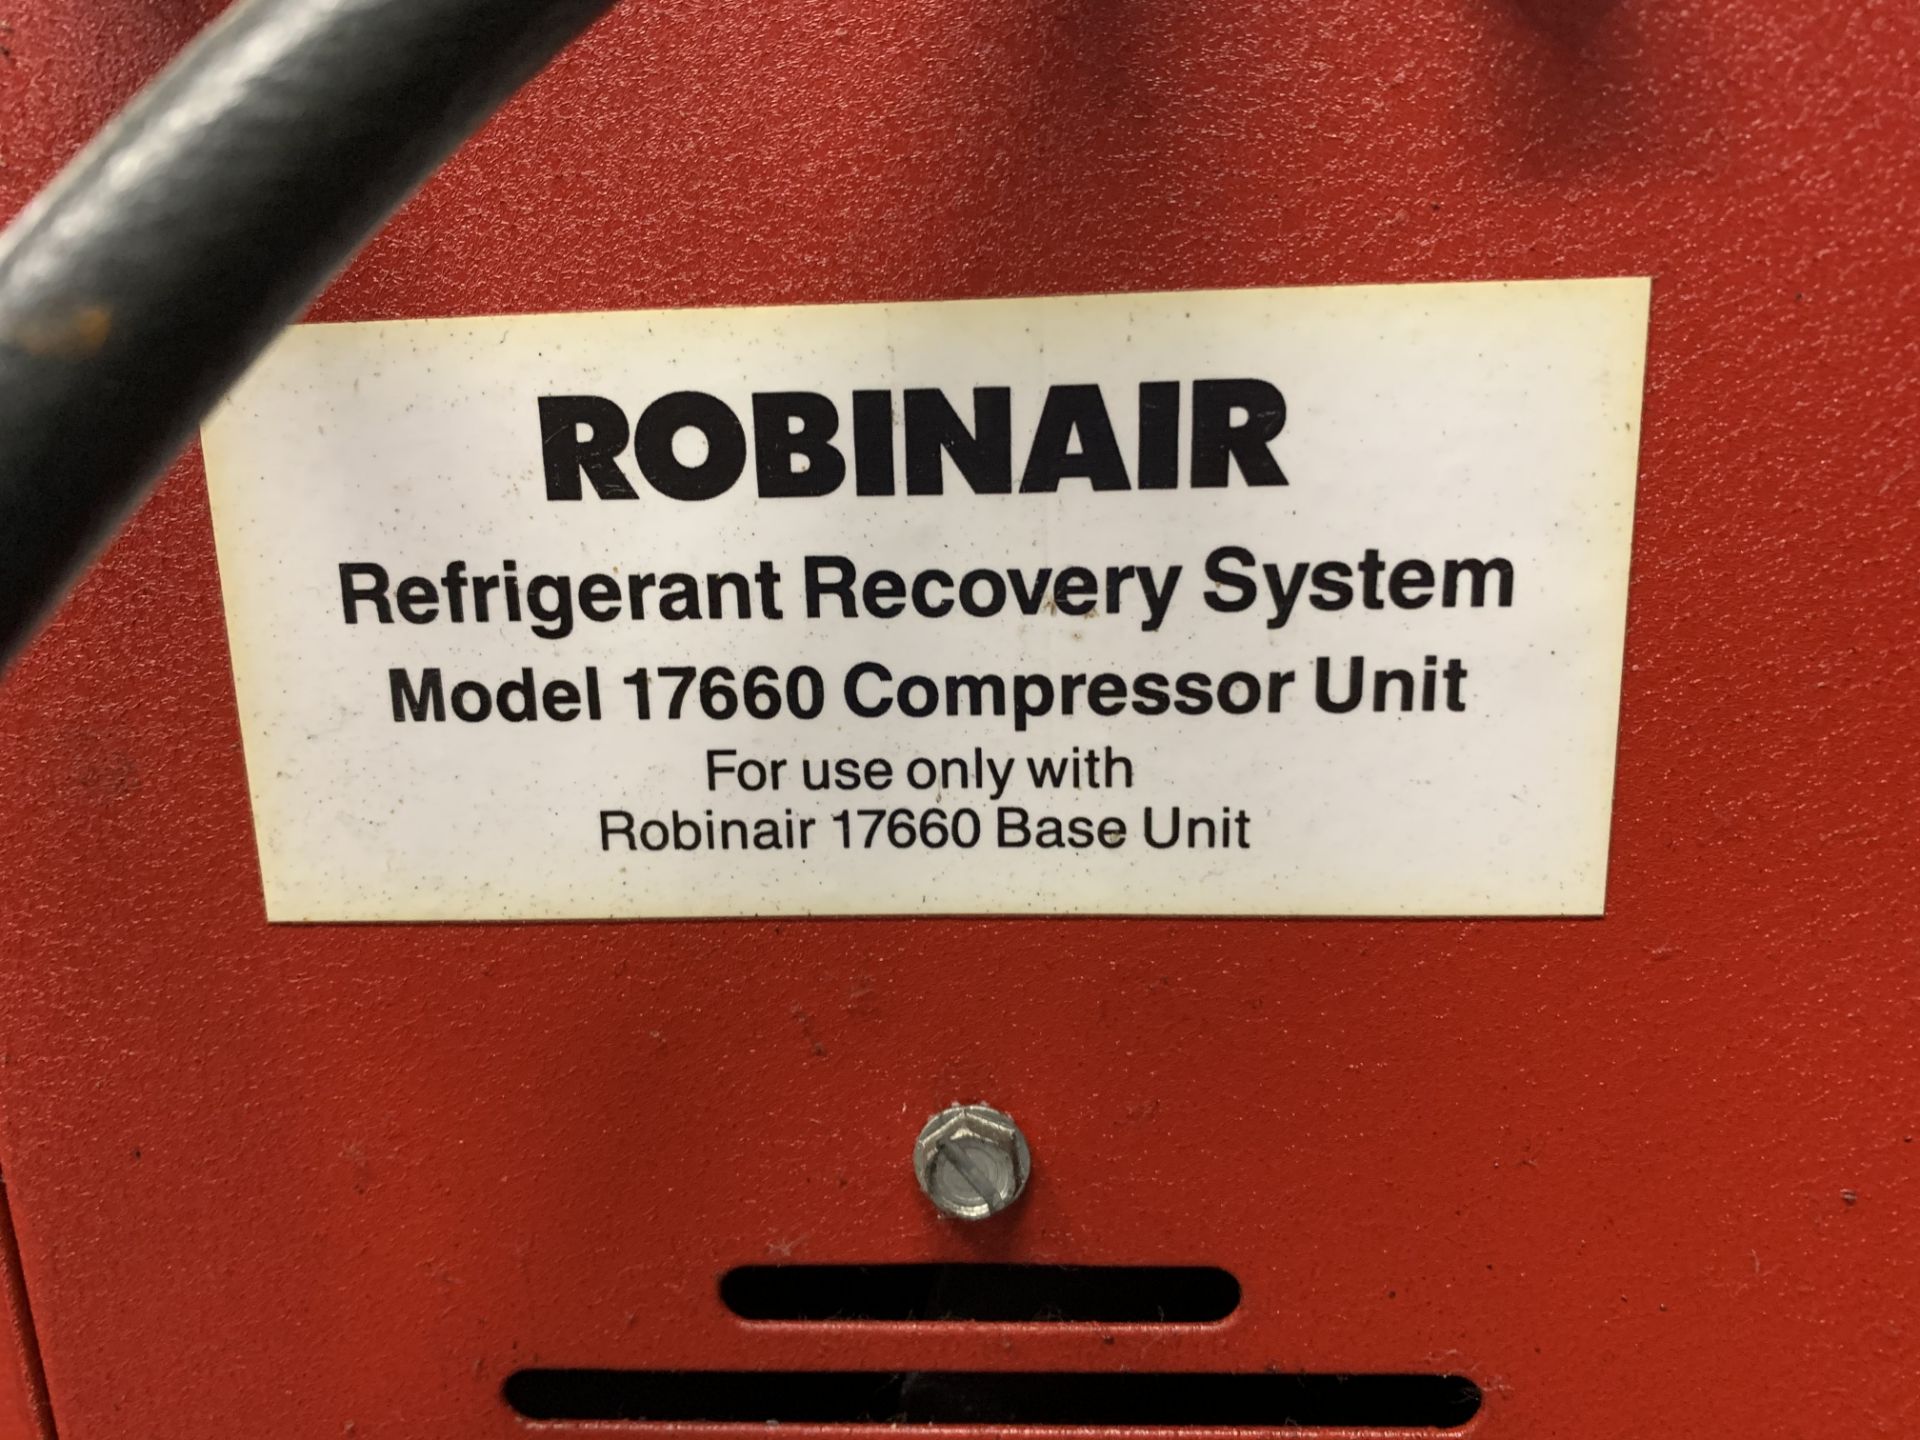 Robinair Refrigerant Recovery System model 17660 Base Unit w/Robinair 17660 Compressor Unit - Image 4 of 4